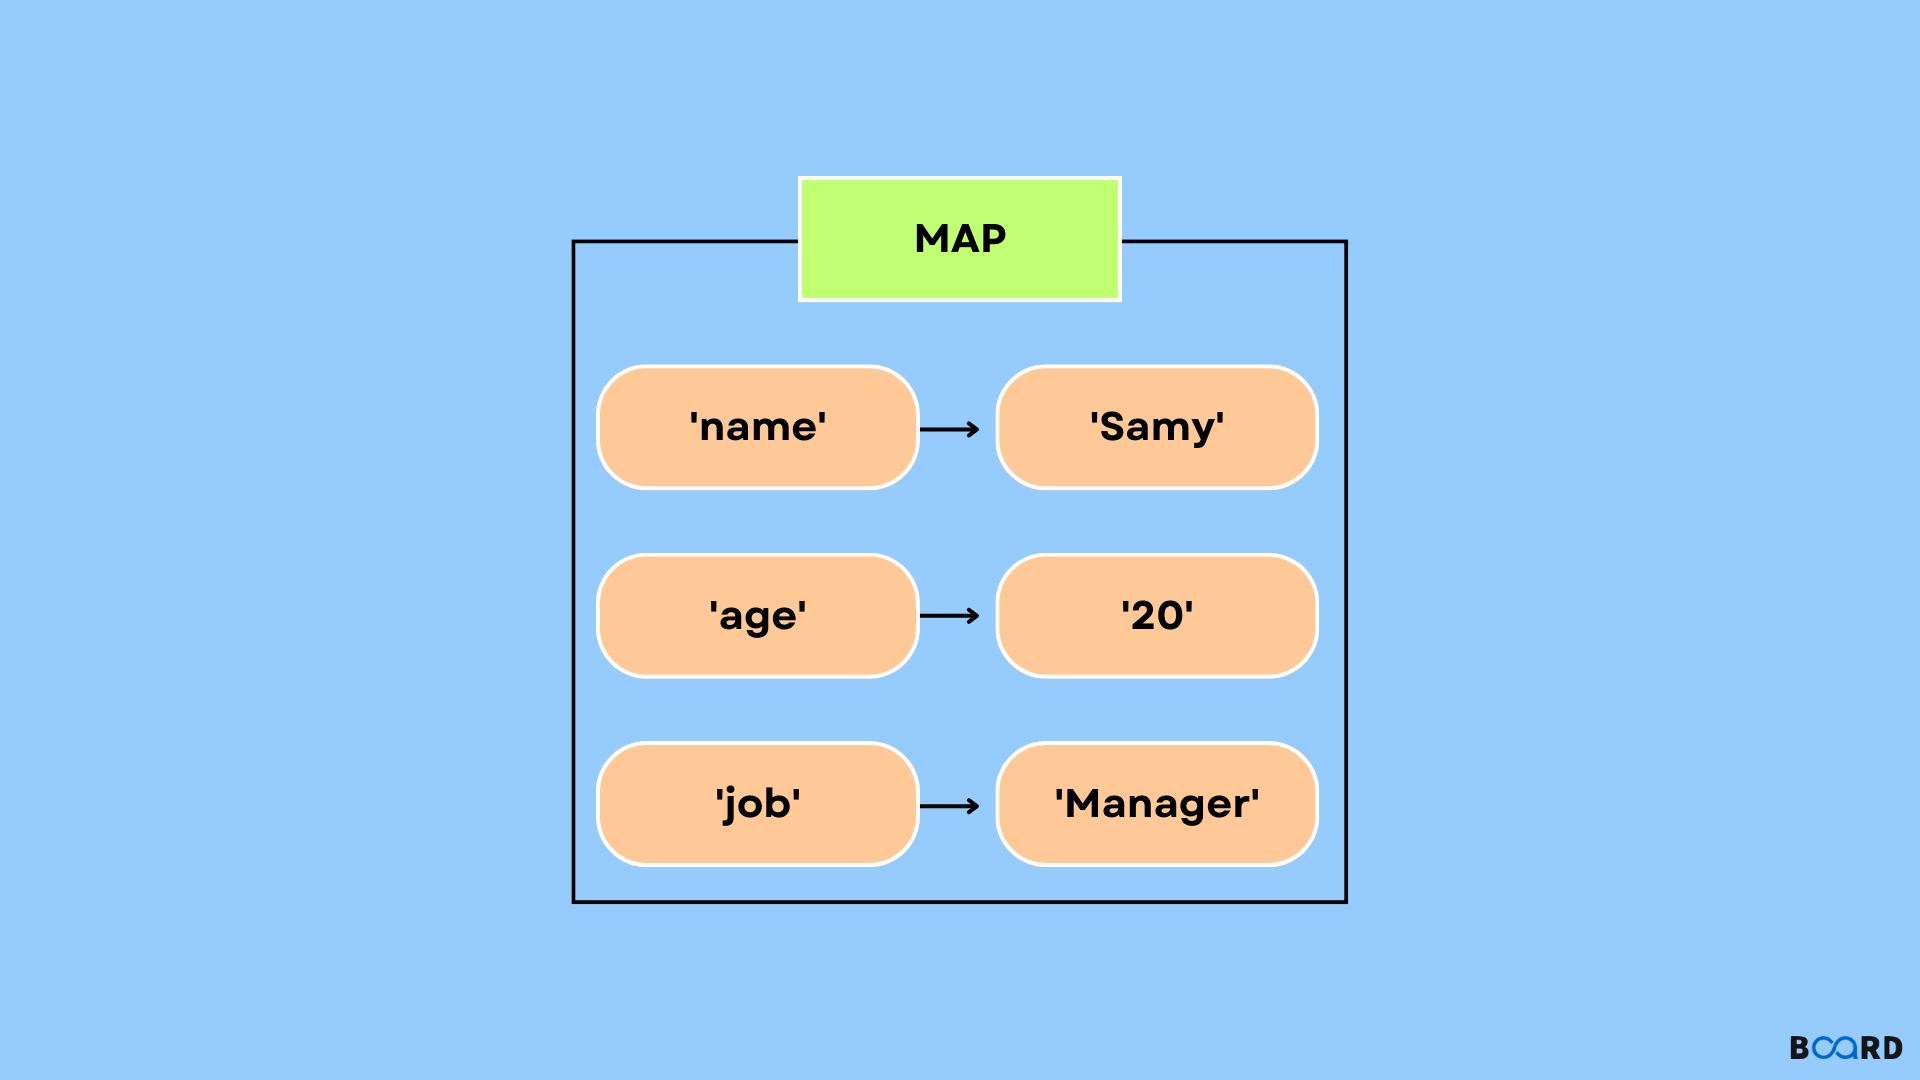 Map in JavaScript